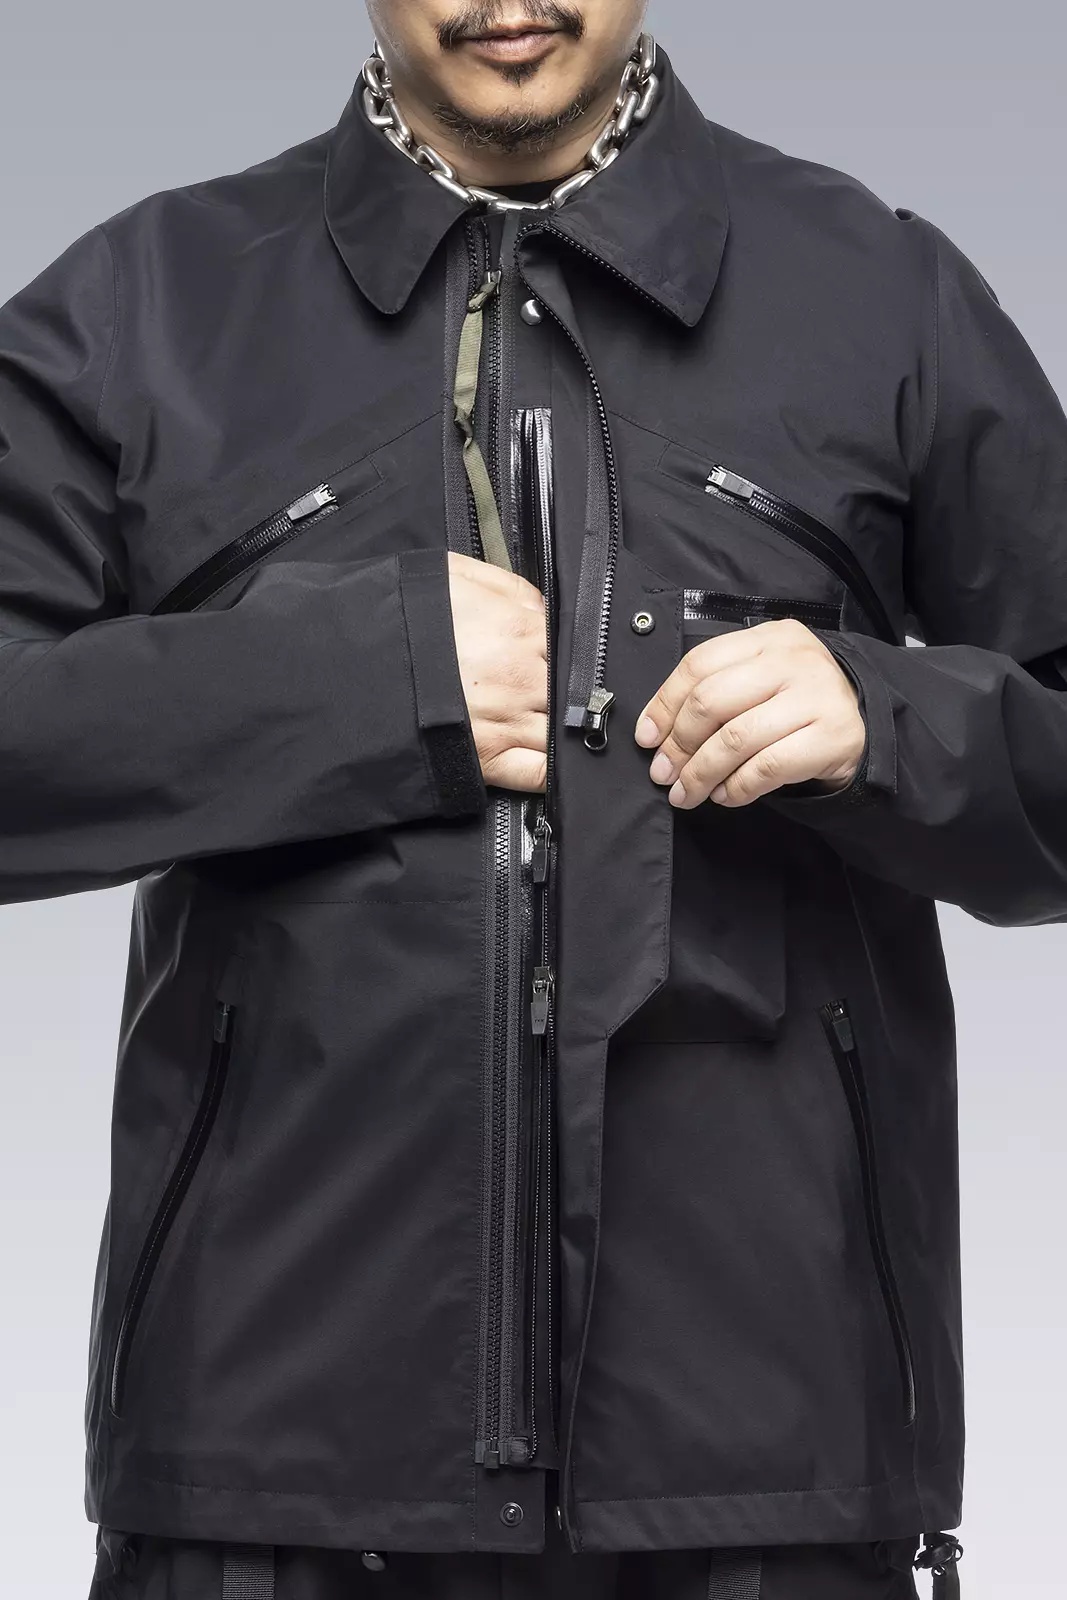 J1A-GTKR-BKS KR EX 3L Gore-Tex® Pro Interops Jacket Black with size 5 WR zippers in gloss black - 22